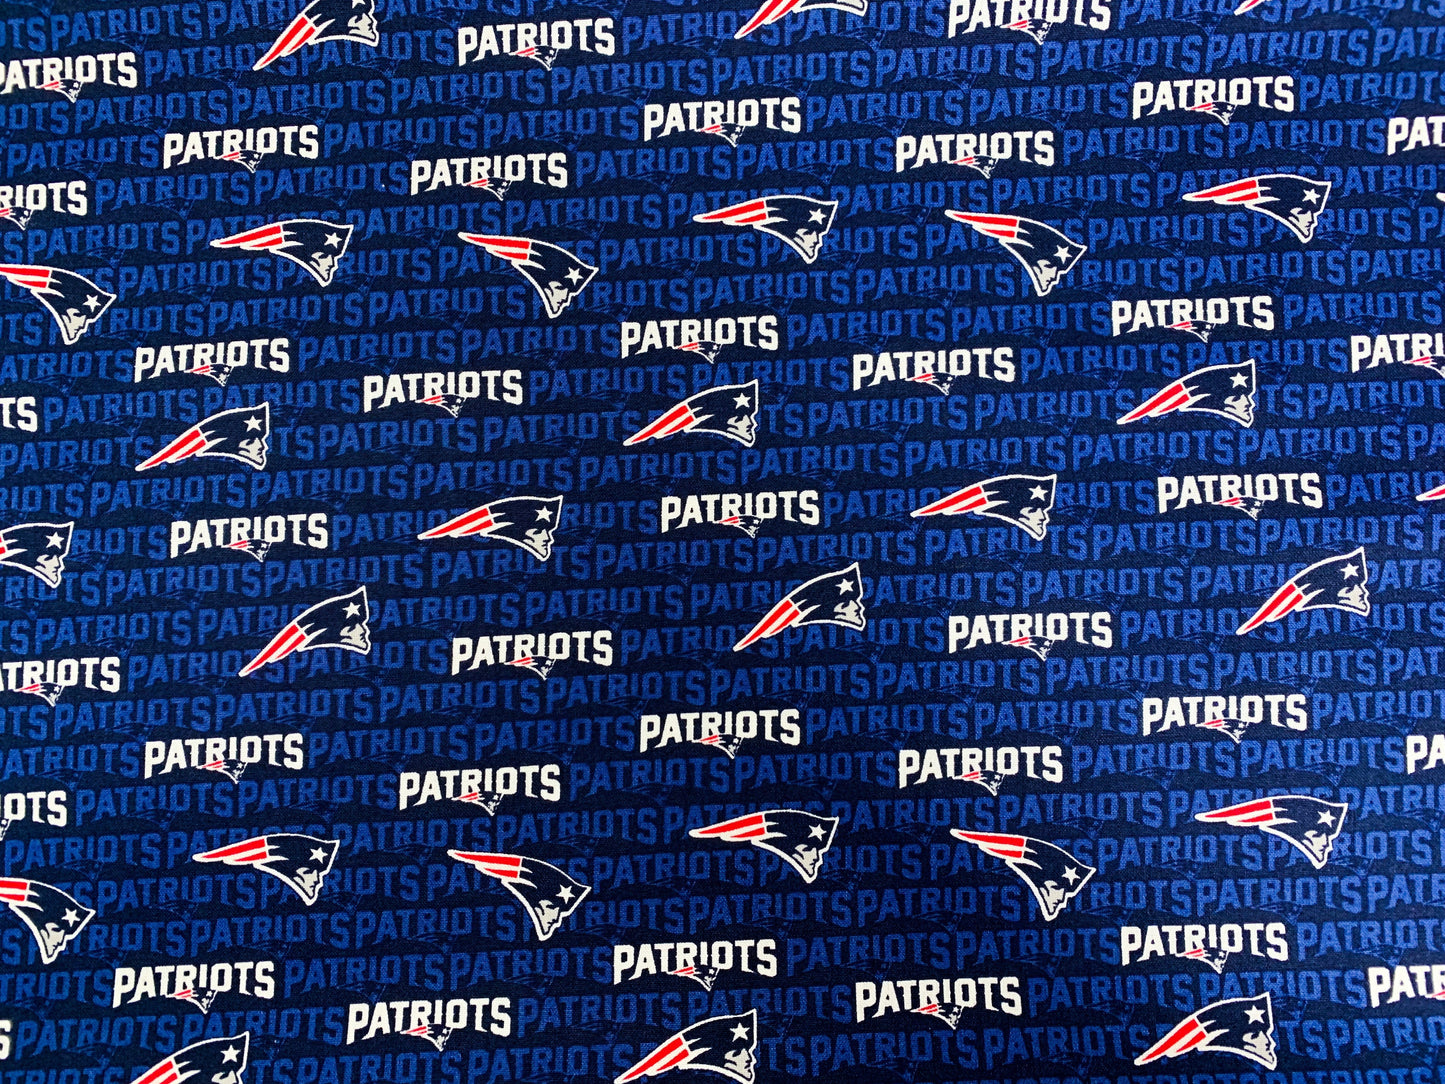 Mini New England Patriots fabric NFL fabric 14500-D Mini Patriots fabric